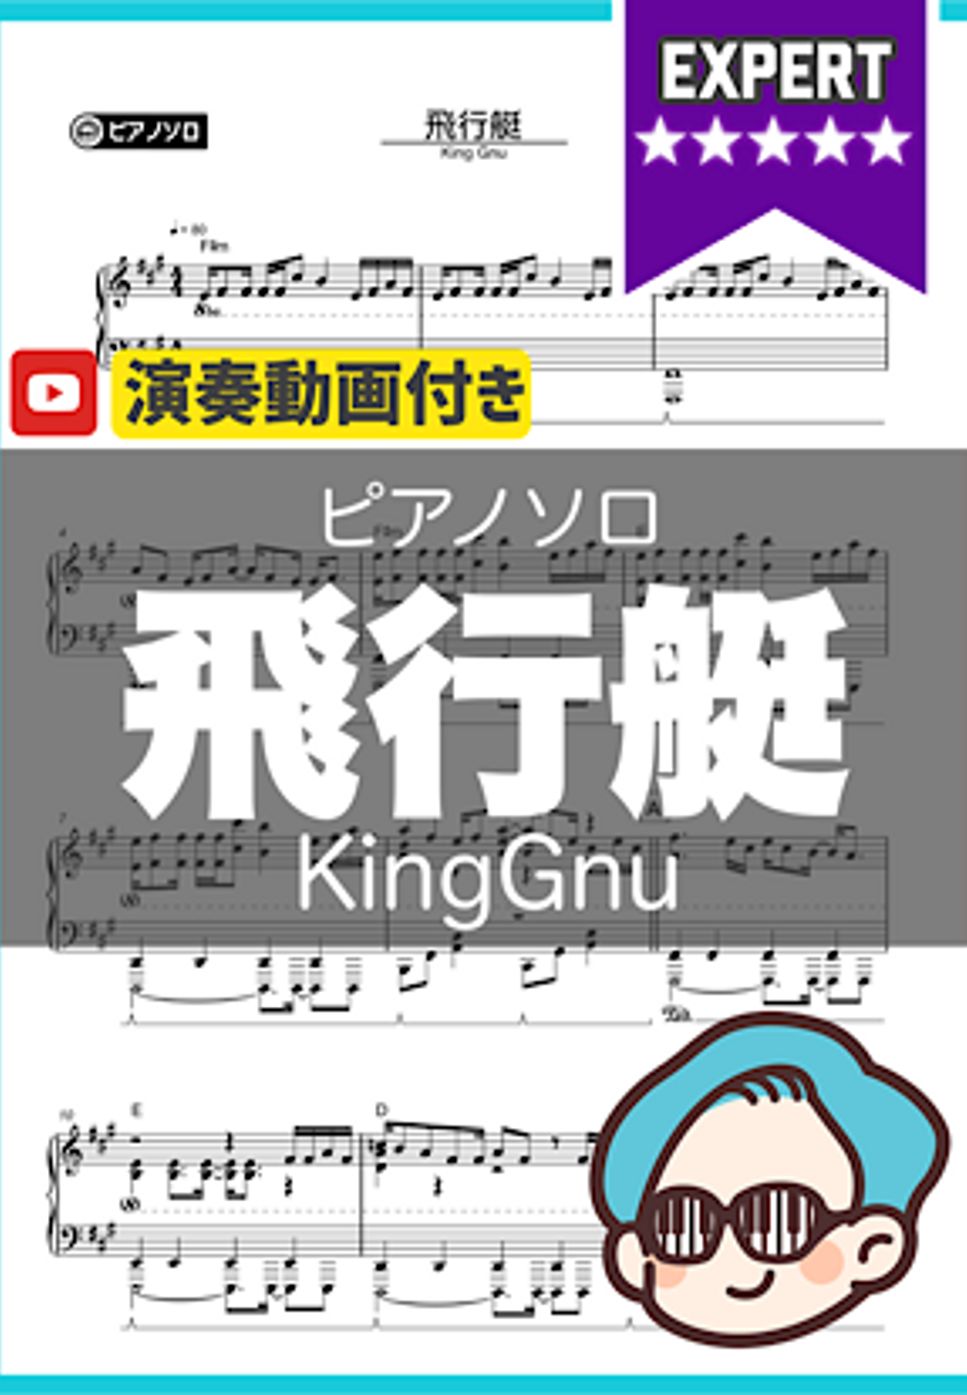 King Gnu - 飛行艇 by シータピアノ